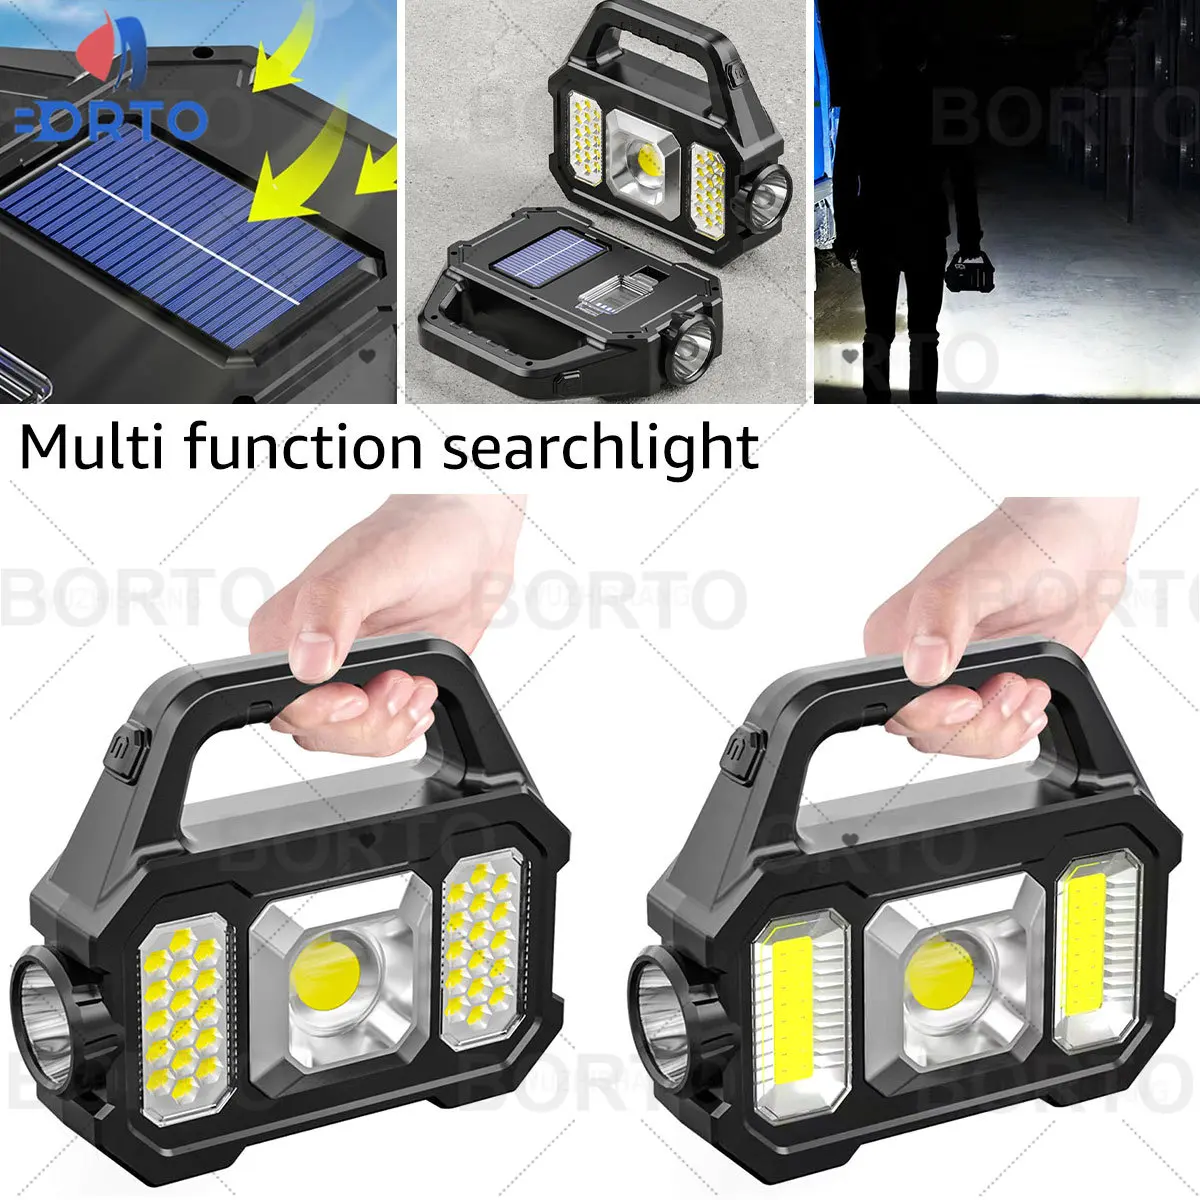 New Super Bright Solar LED Camping Flashlight Work Lights USB Rechargeable Handheld Solar Powered Lanterns Spotlight Searchlight